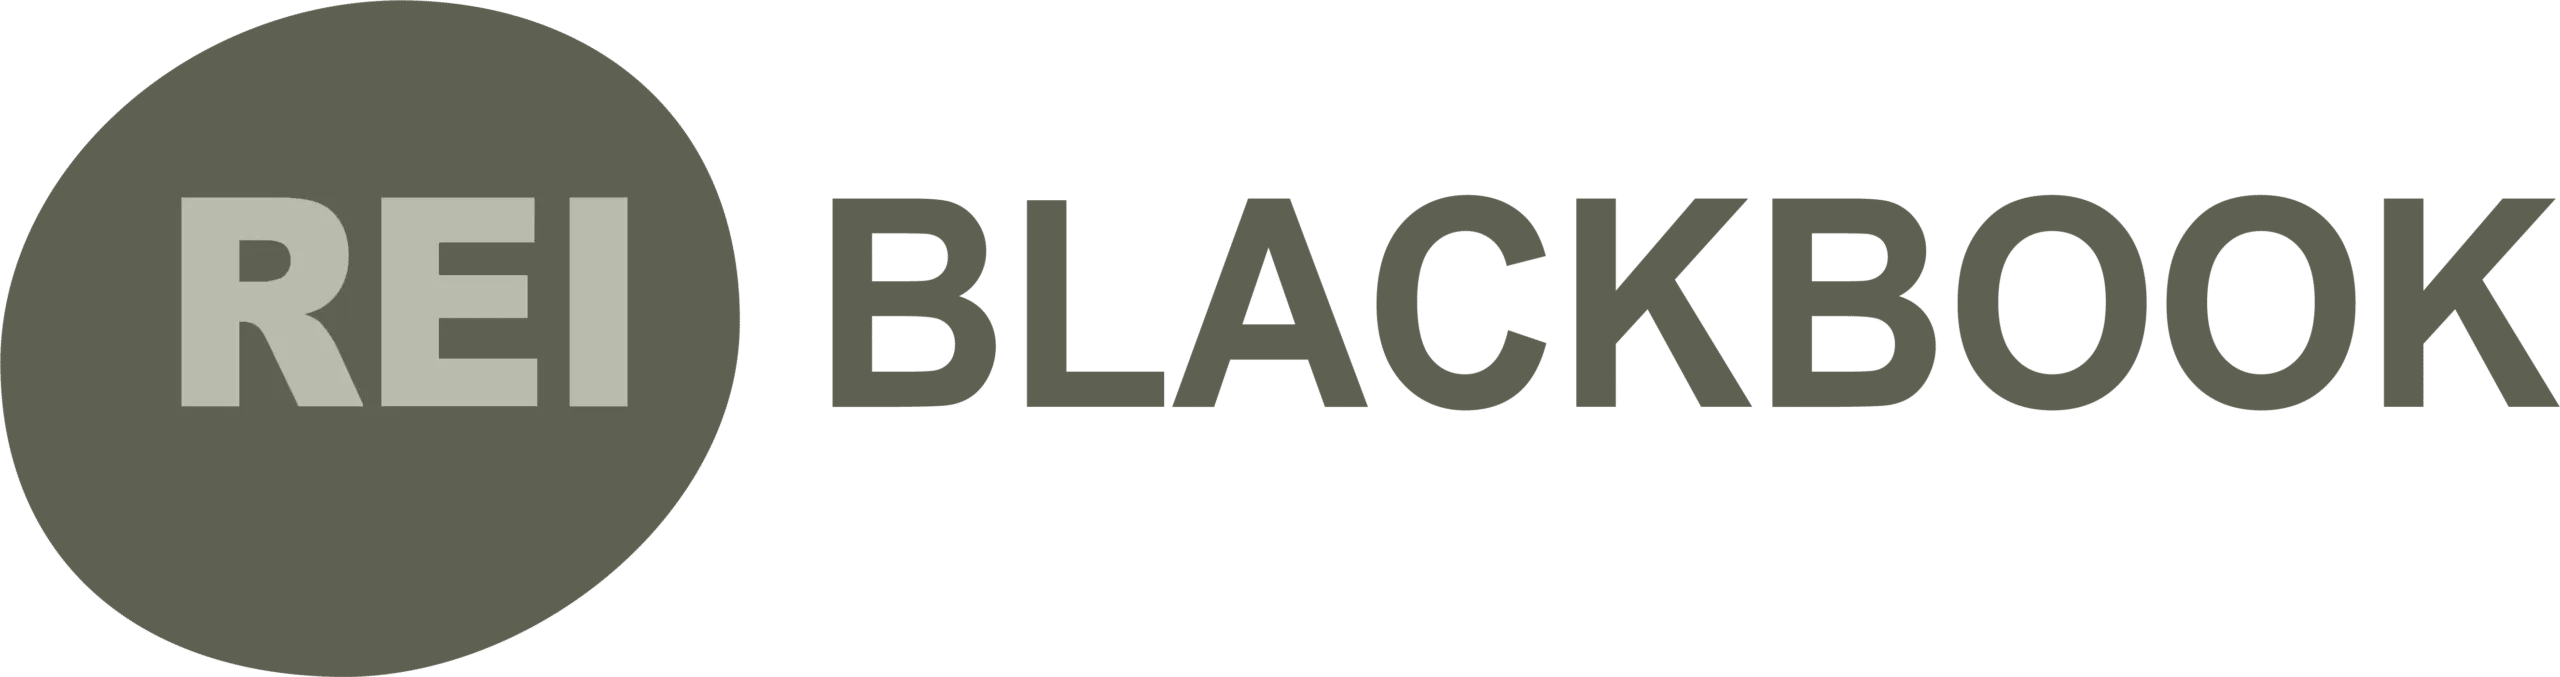 Rei blackbook